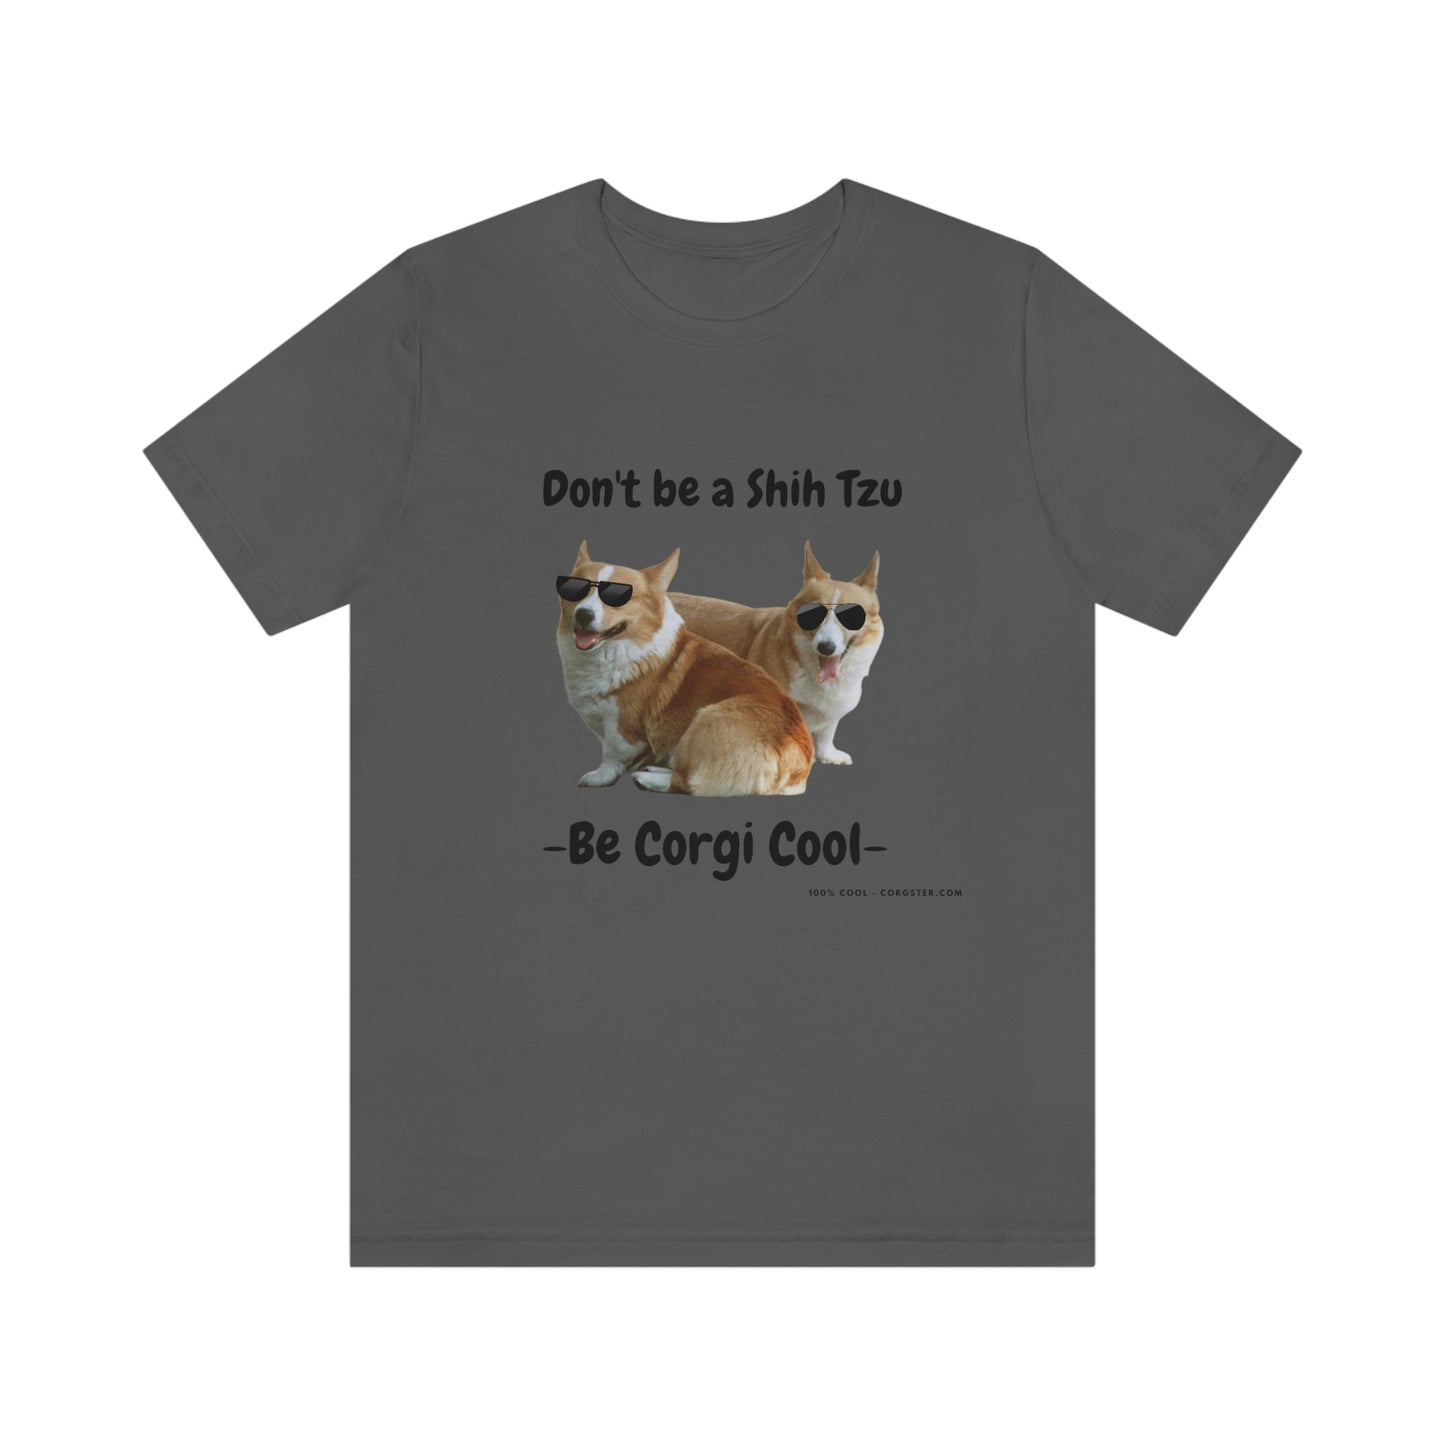 Don't be a Shih Tzu!  Cool Corgsters T-Shirt